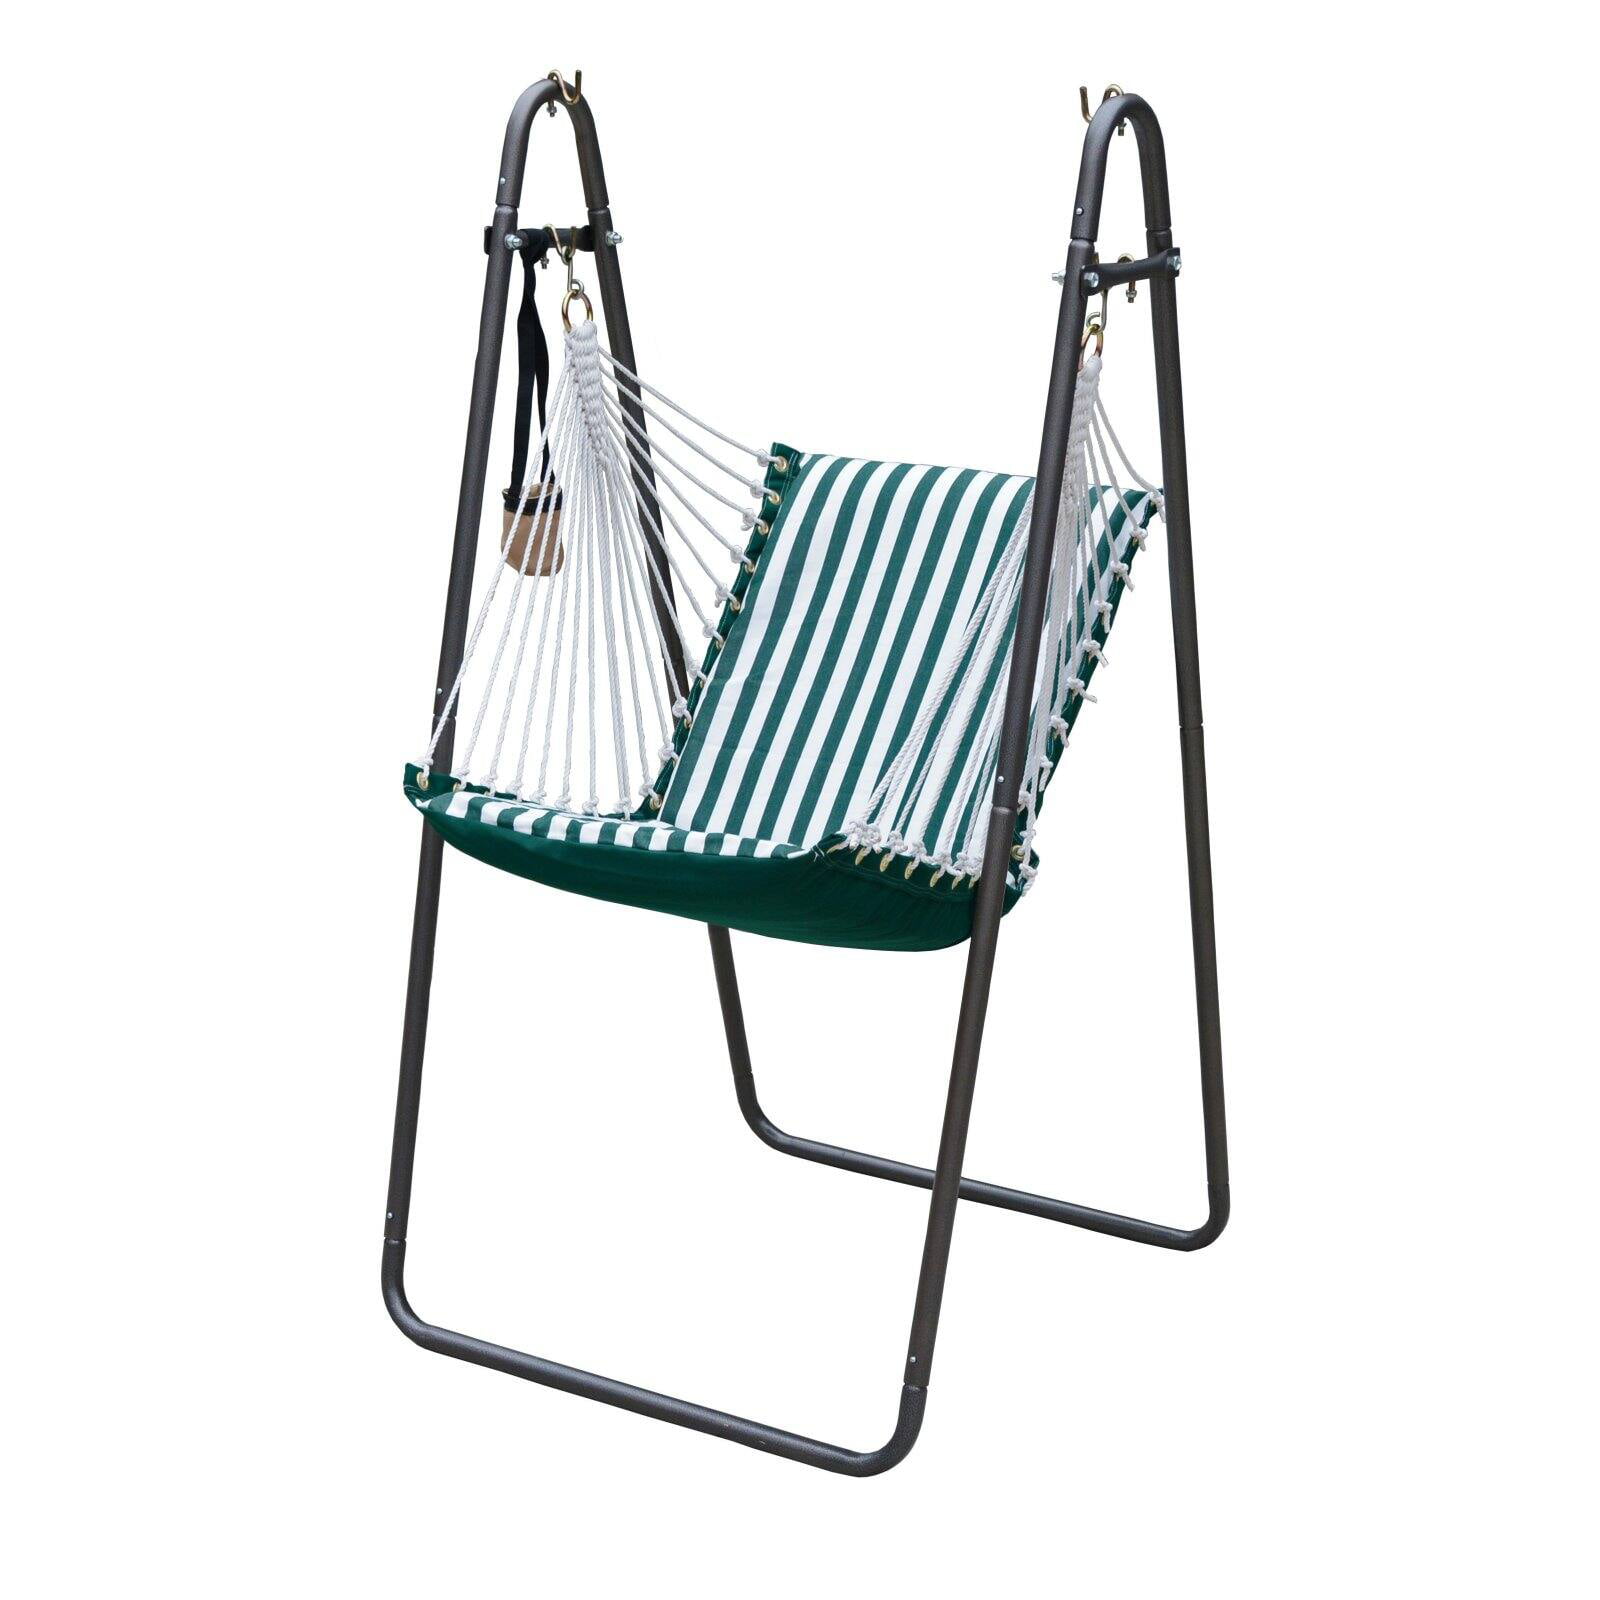 1525s216214br Sunbrella Soft Comfort Swing Chair & Stand, Green